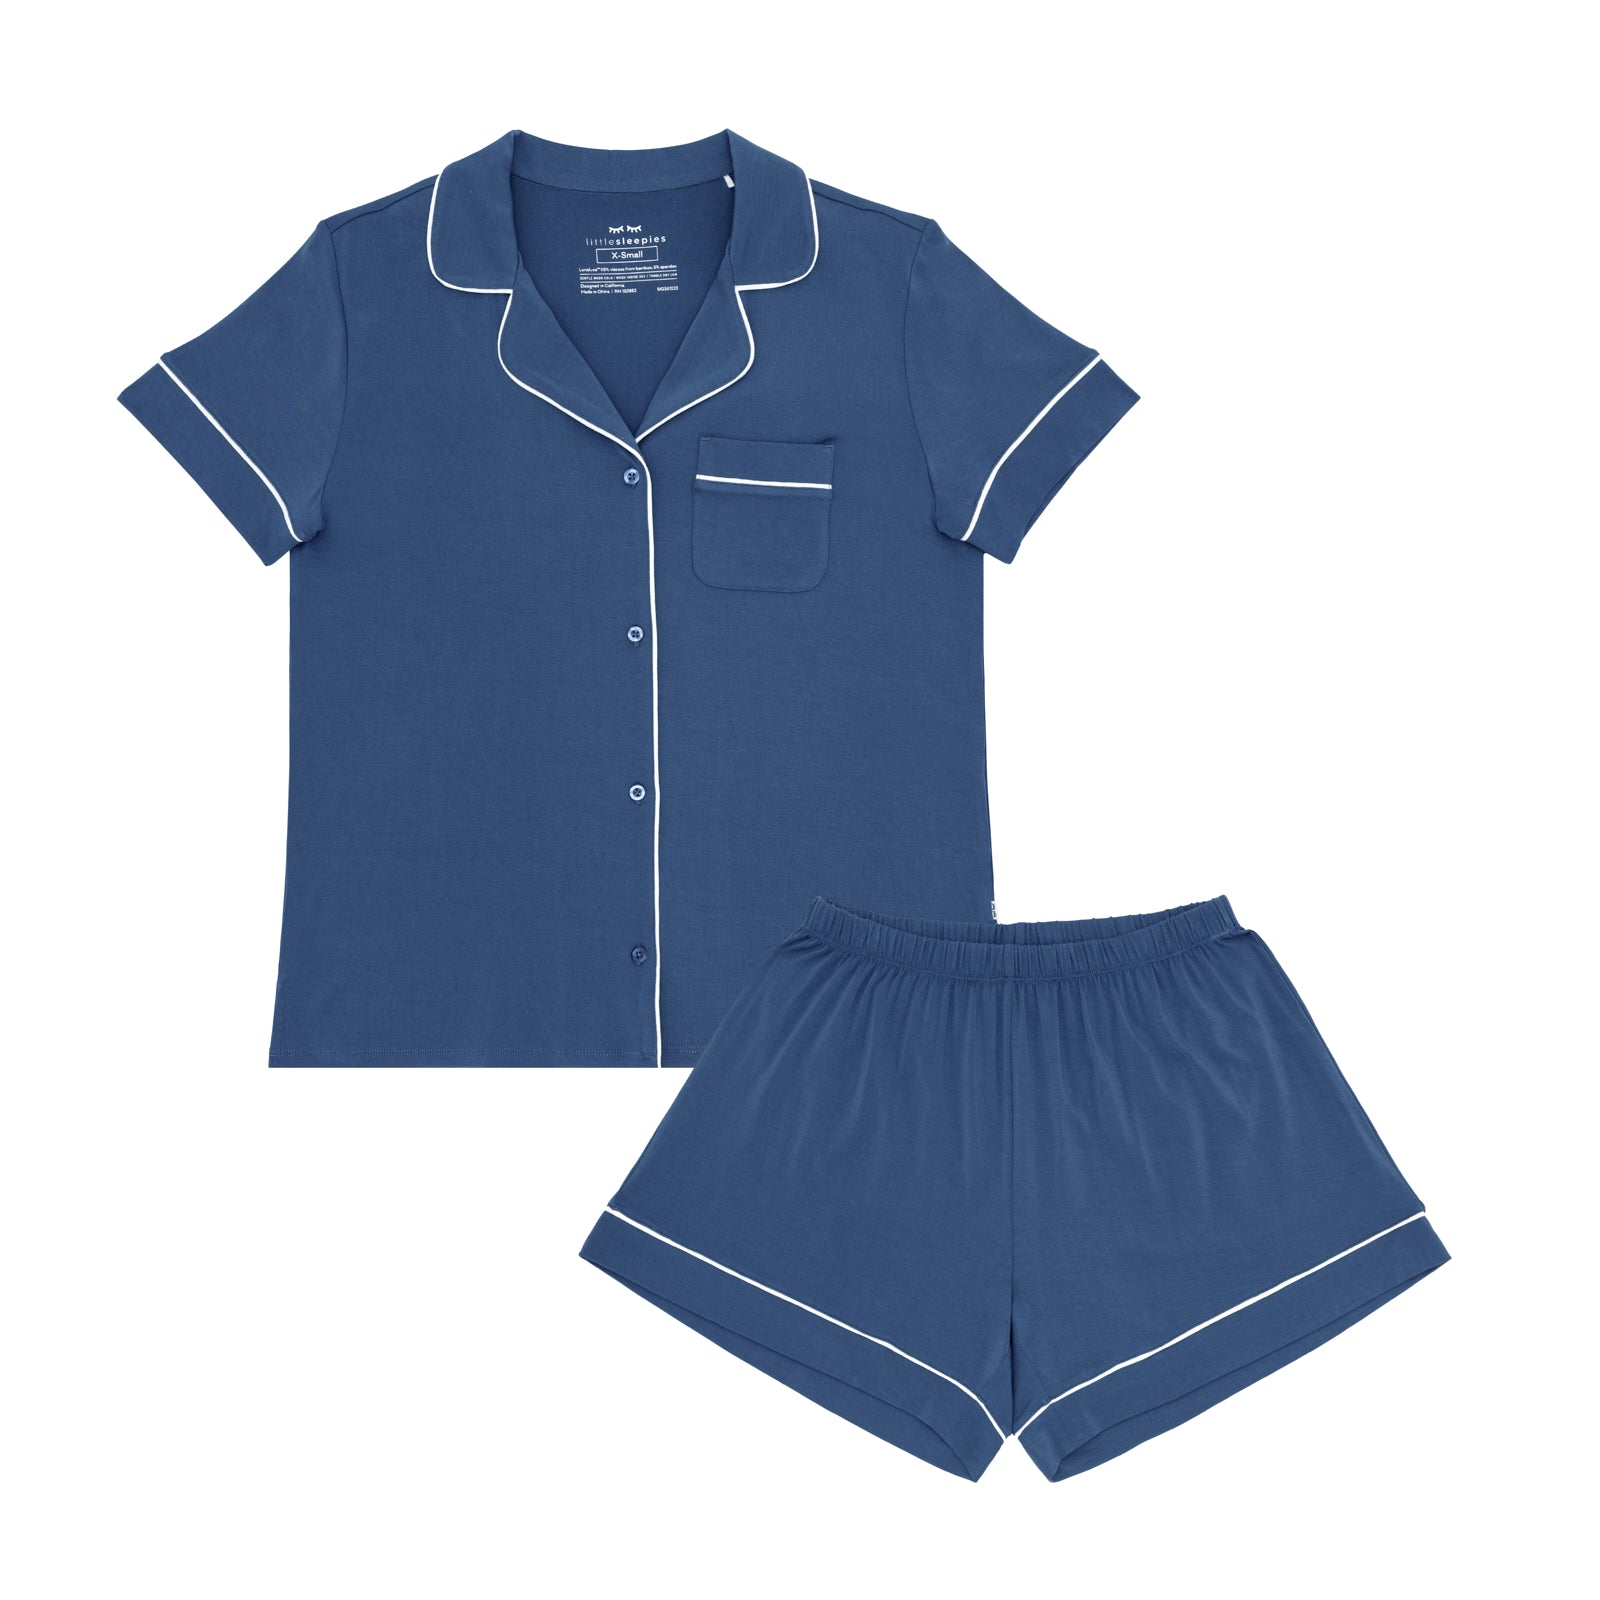 Flat lay image of an Indigo women's short sleeve and shorts pajama set